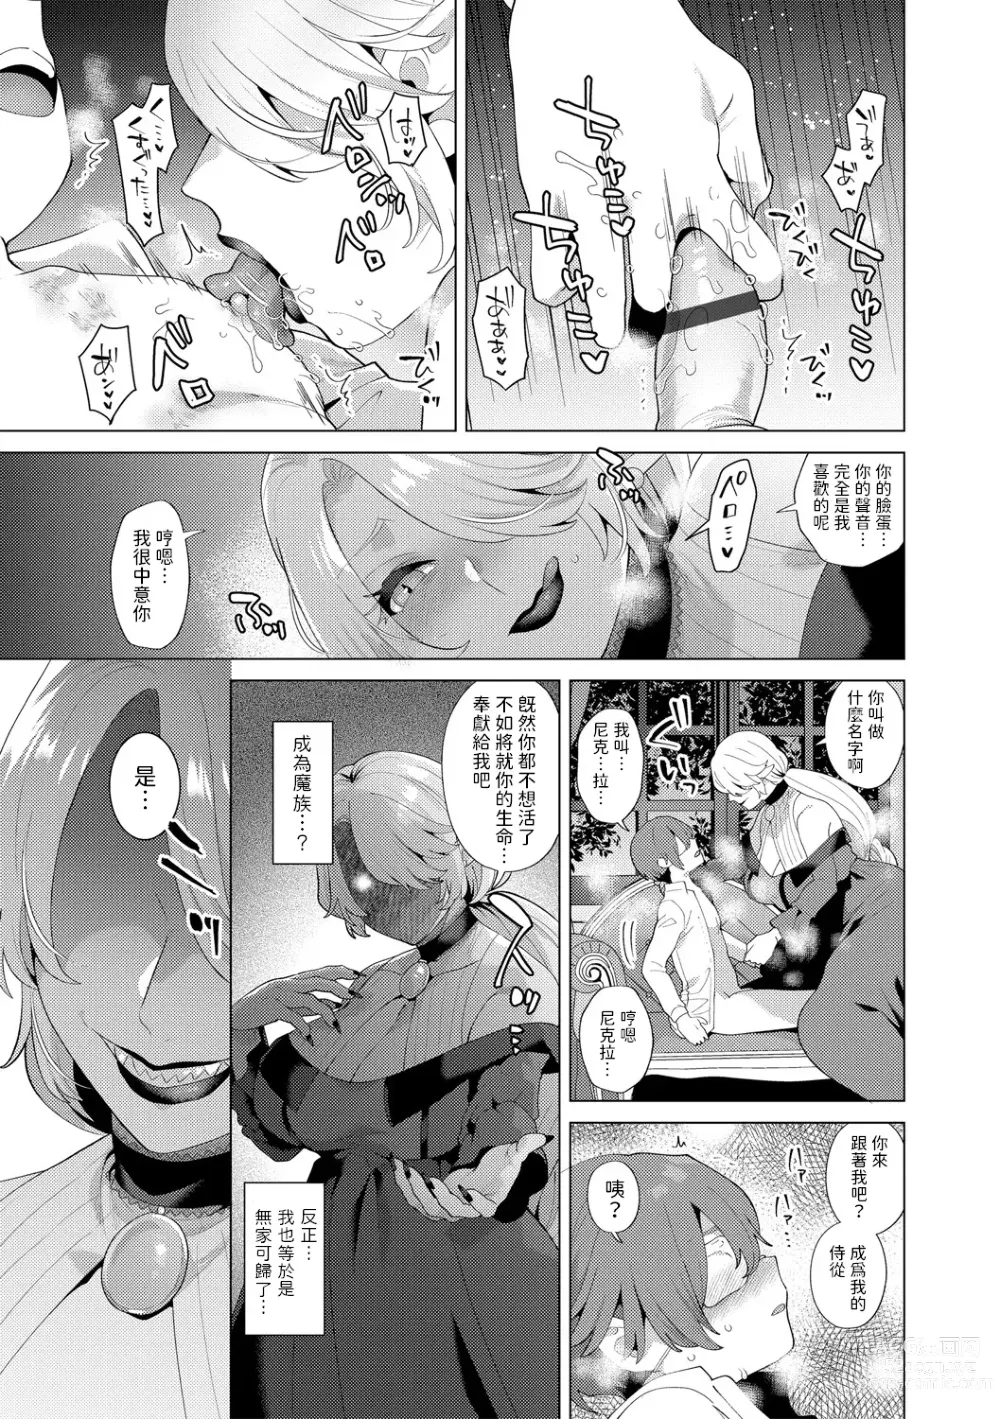 Page 13 of manga Reventlow-jou no Joukou Jikenbo Ch. 7